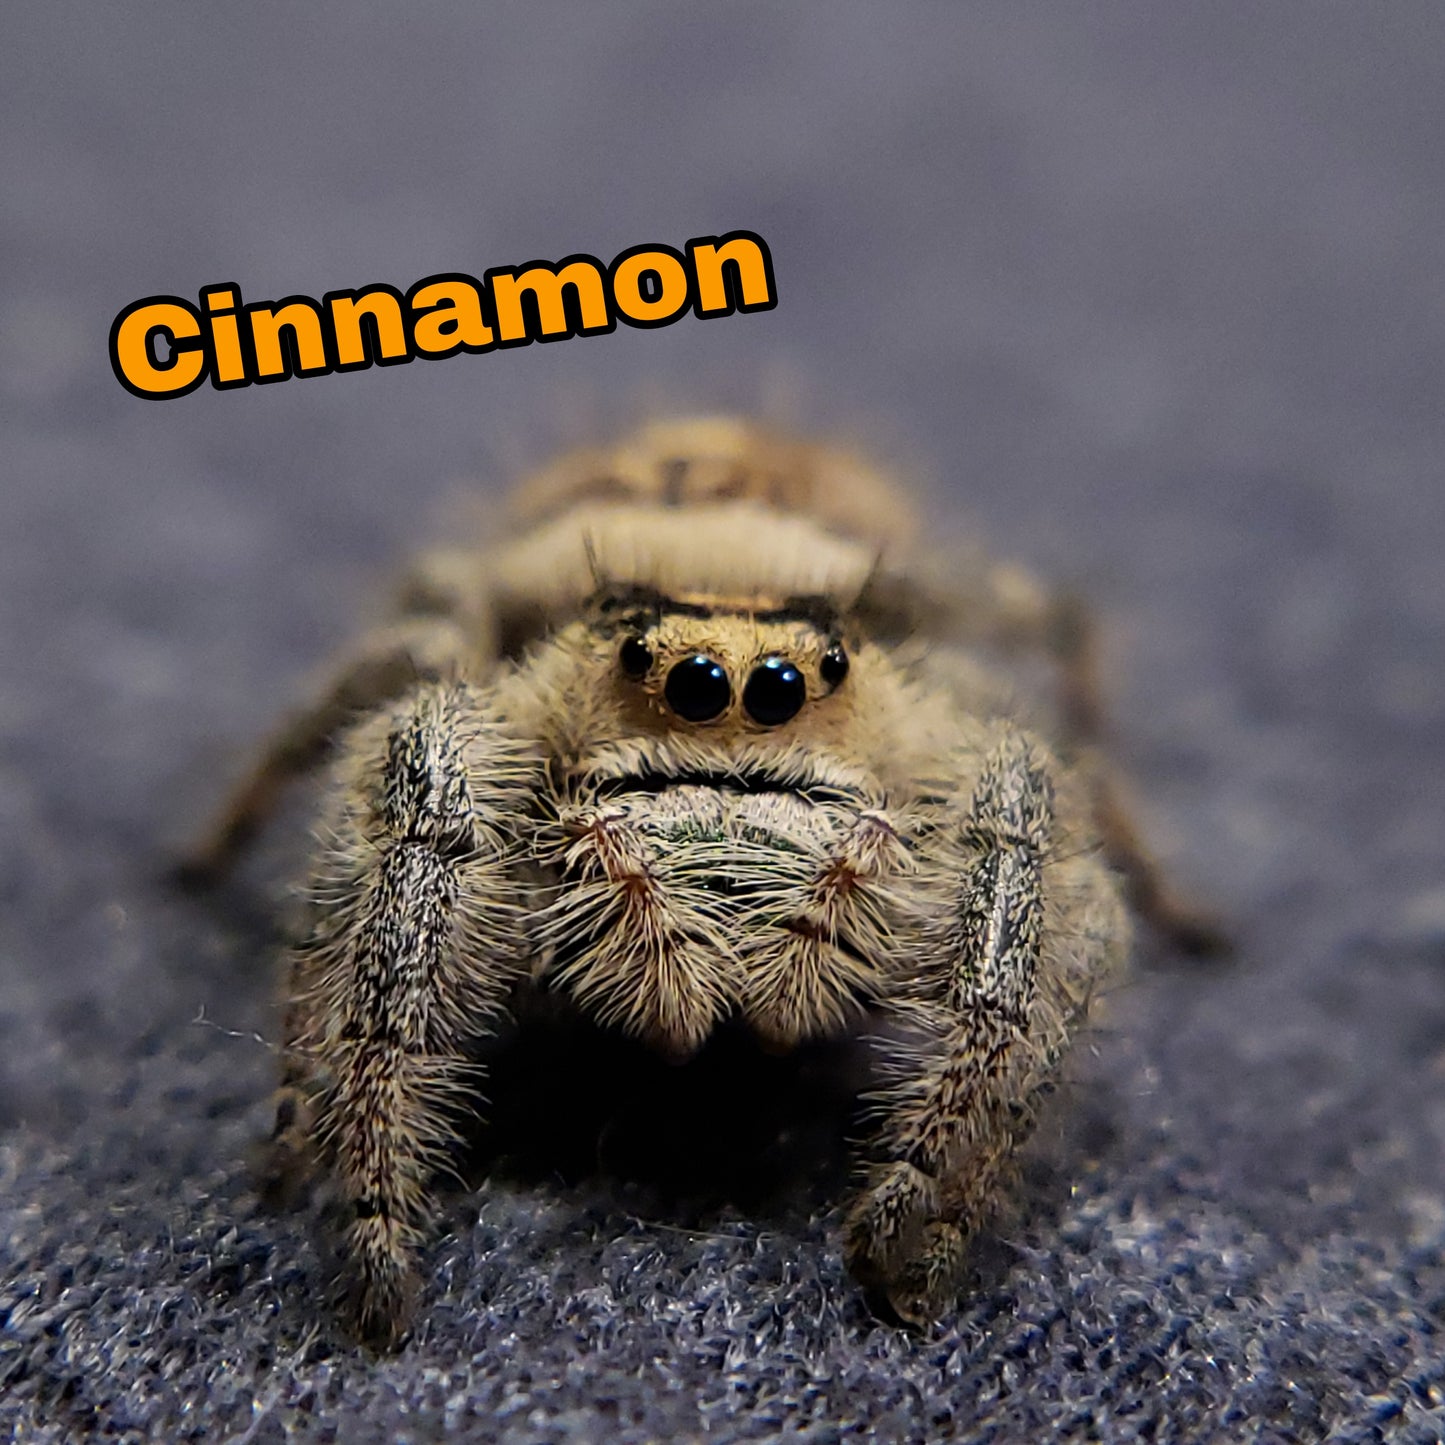 Regal Jumping Spider "Cinnamon" - Jumping Spiders For Sale - Spiders Source - #1 Regal Jumping Spider Store